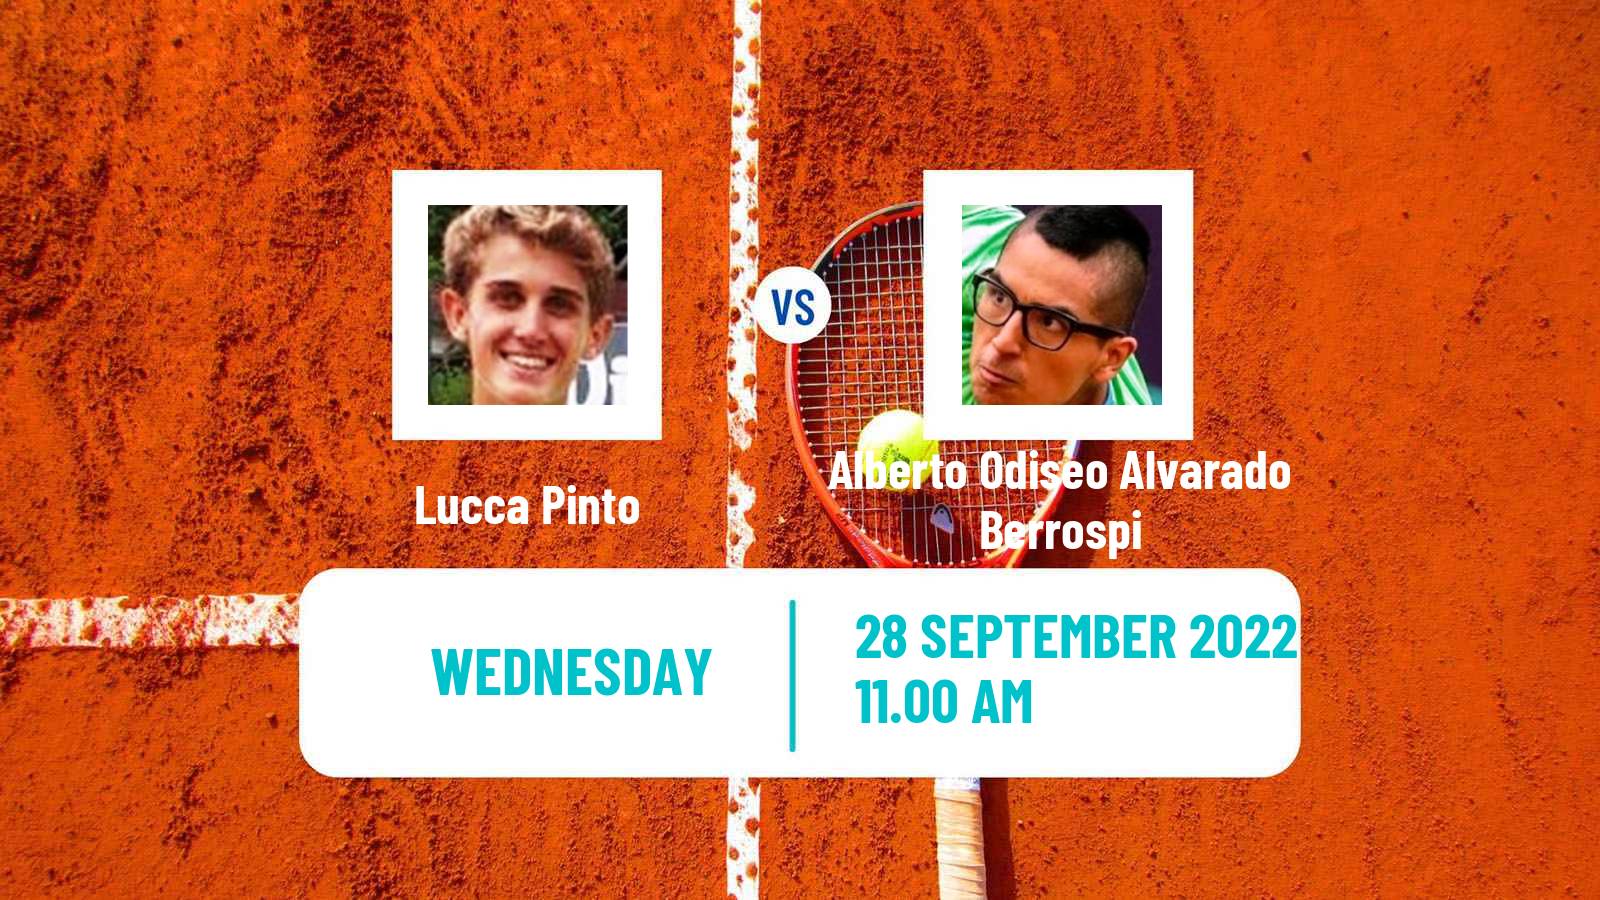 Tennis ITF Tournaments Lucca Pinto - Alberto Odiseo Alvarado Berrospi